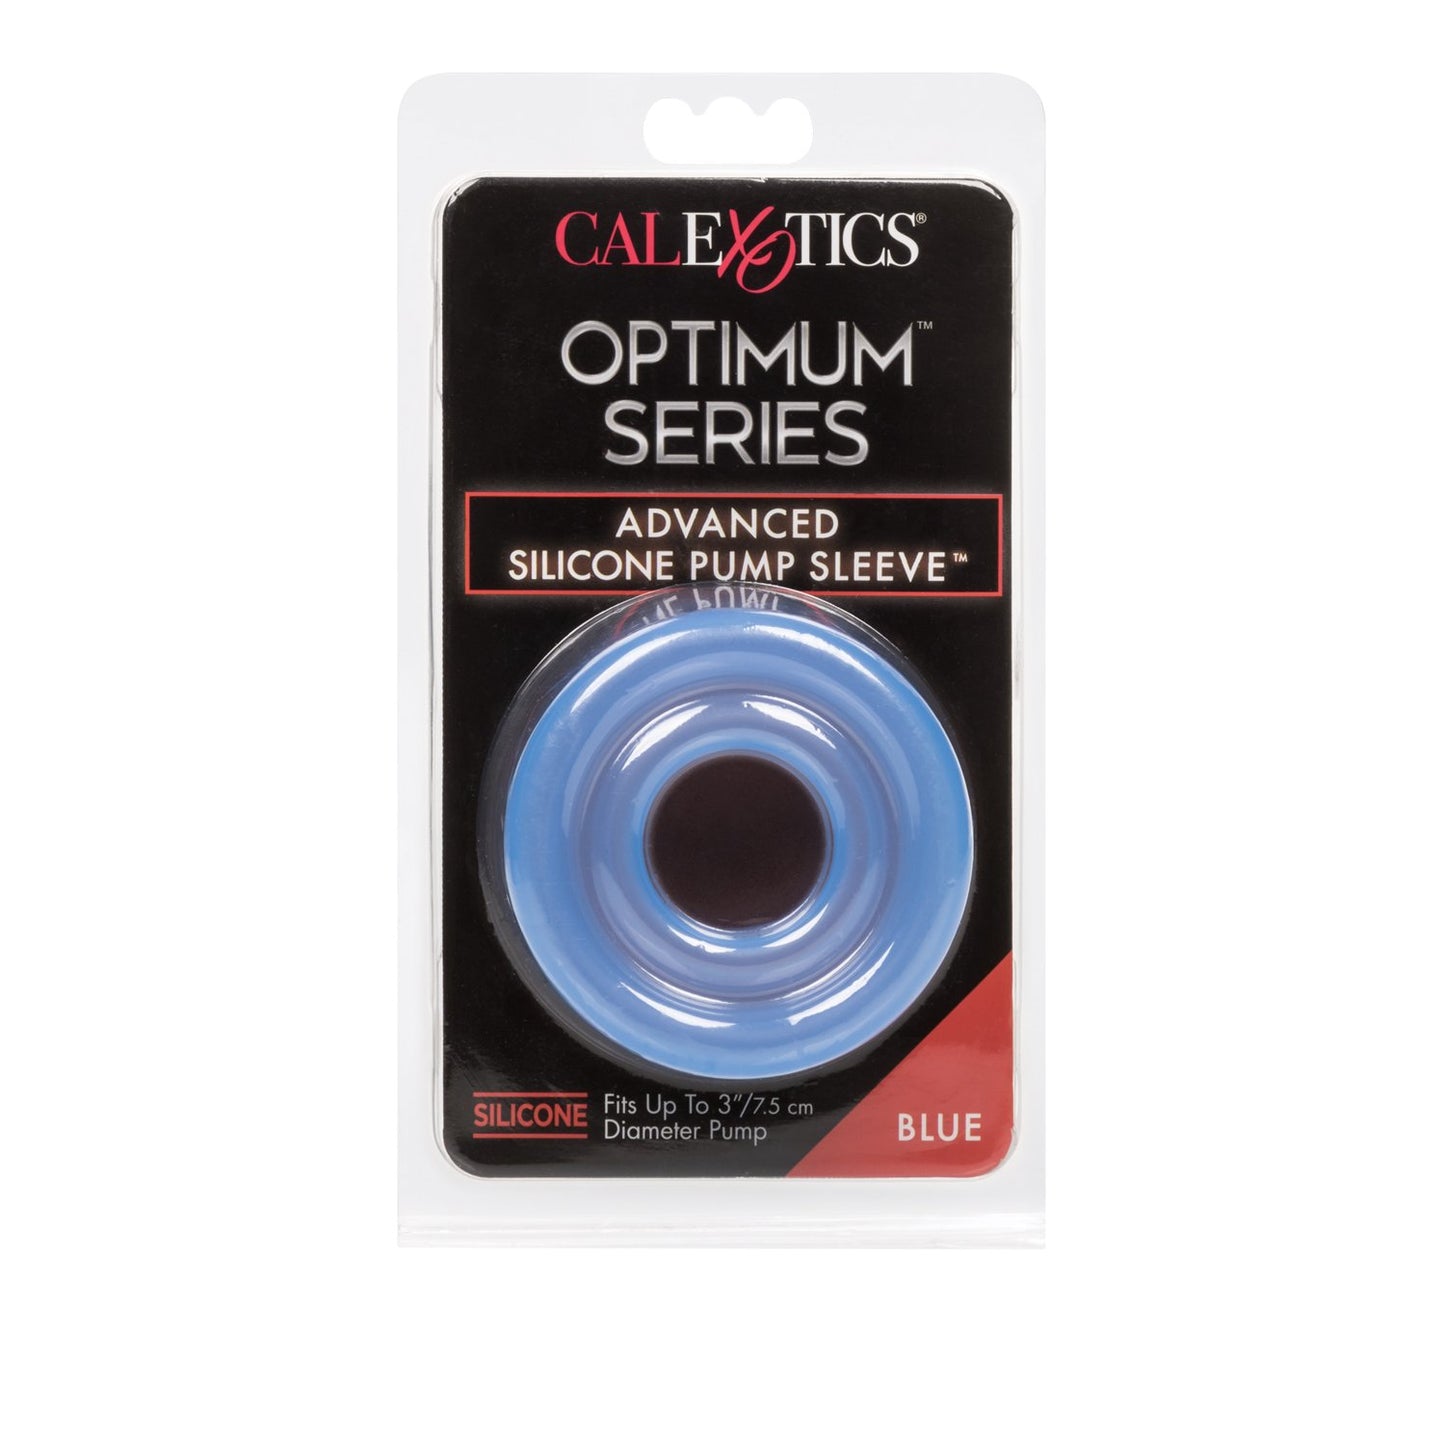 Optimum Series Advanced Silicone Pump Sleeve